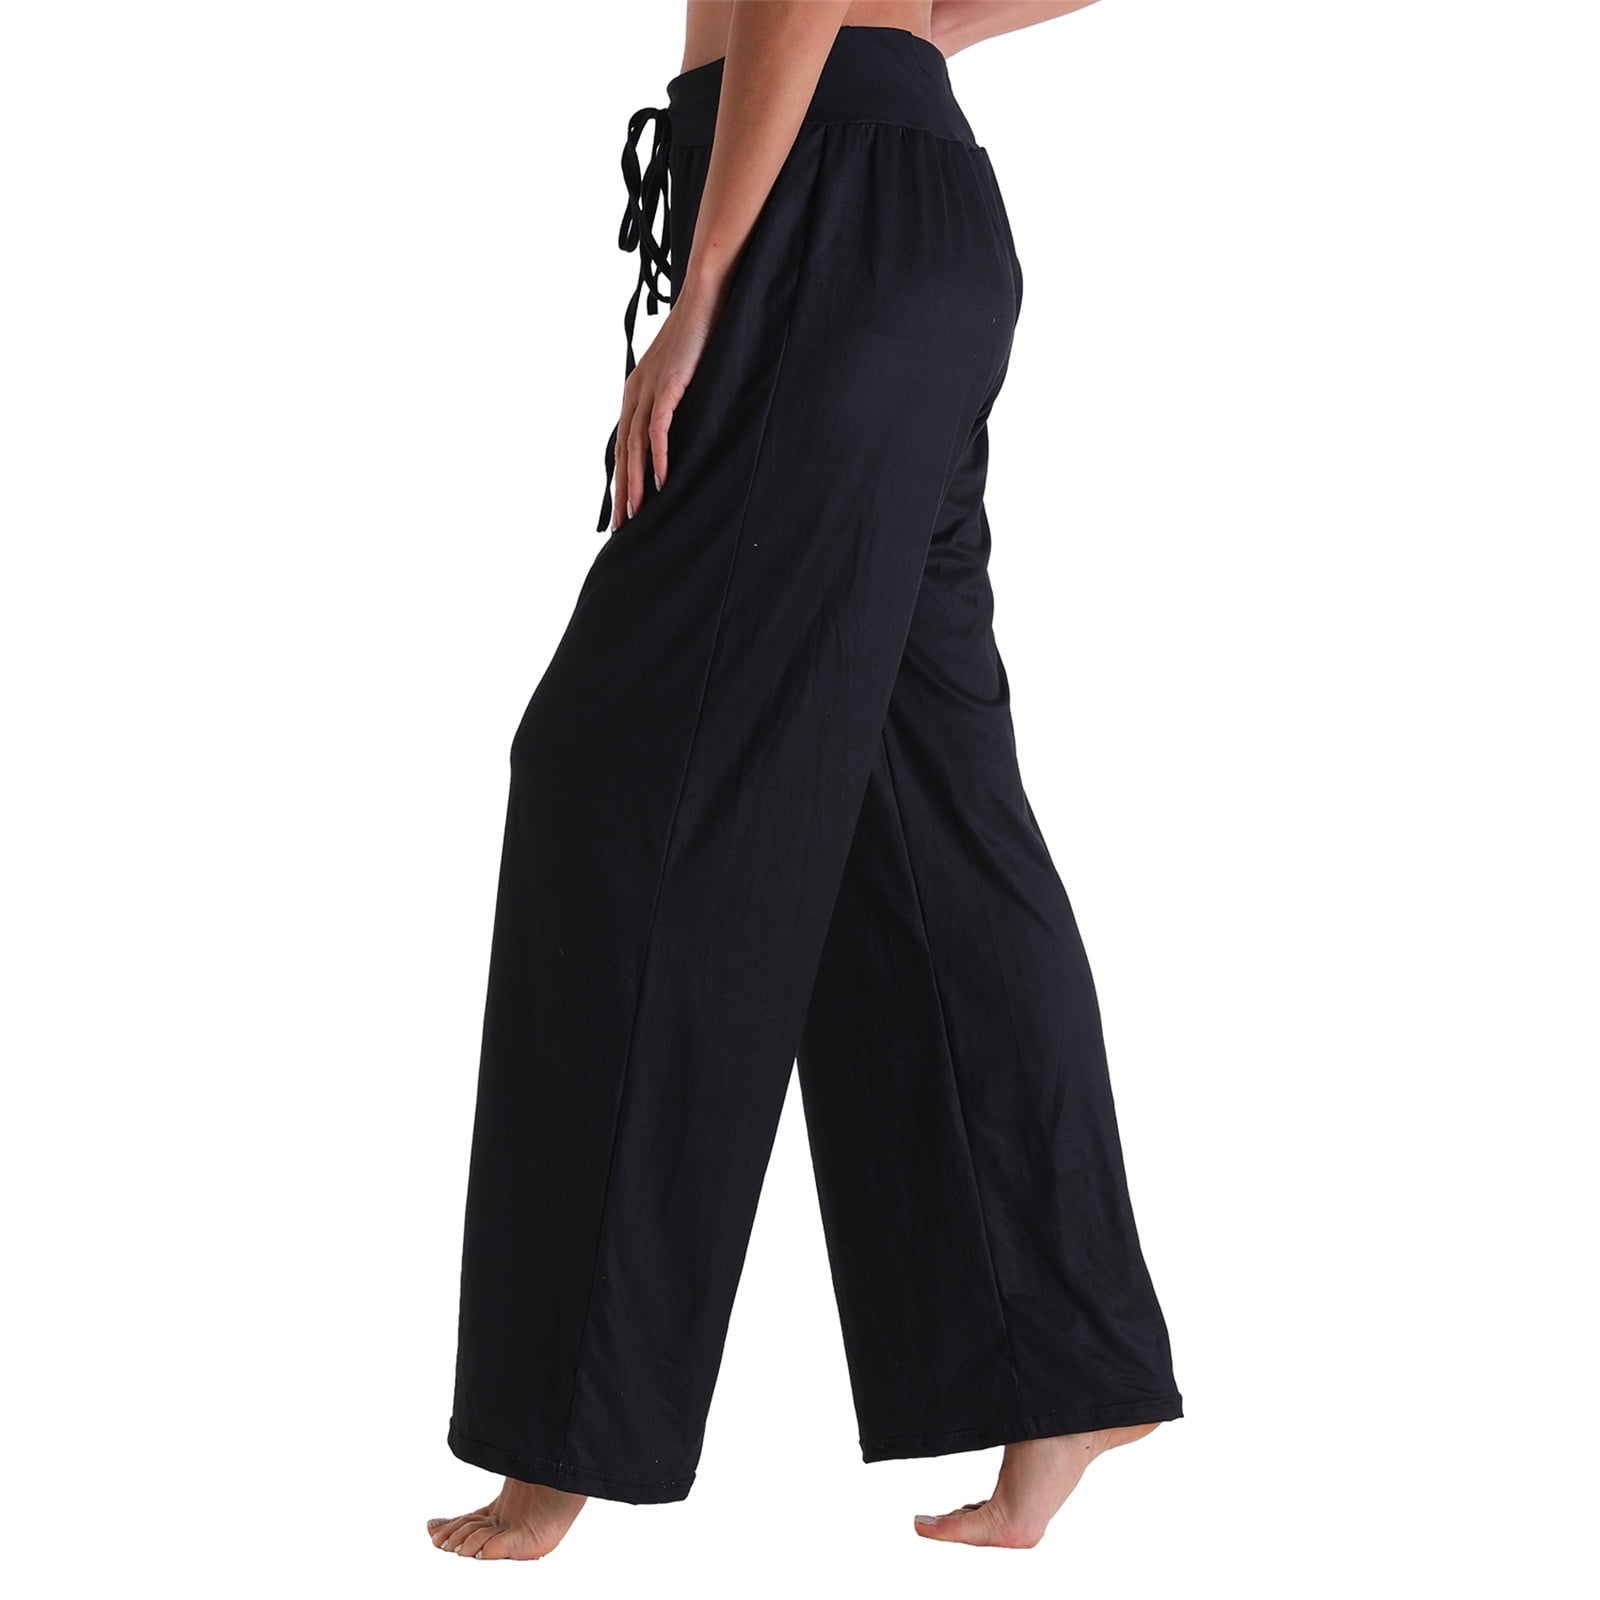 PEASKJP Sweatpants Women's Ease Into Comfort Everyday Chic Straight Pant  w/Tummy Control Black - Walmart.com